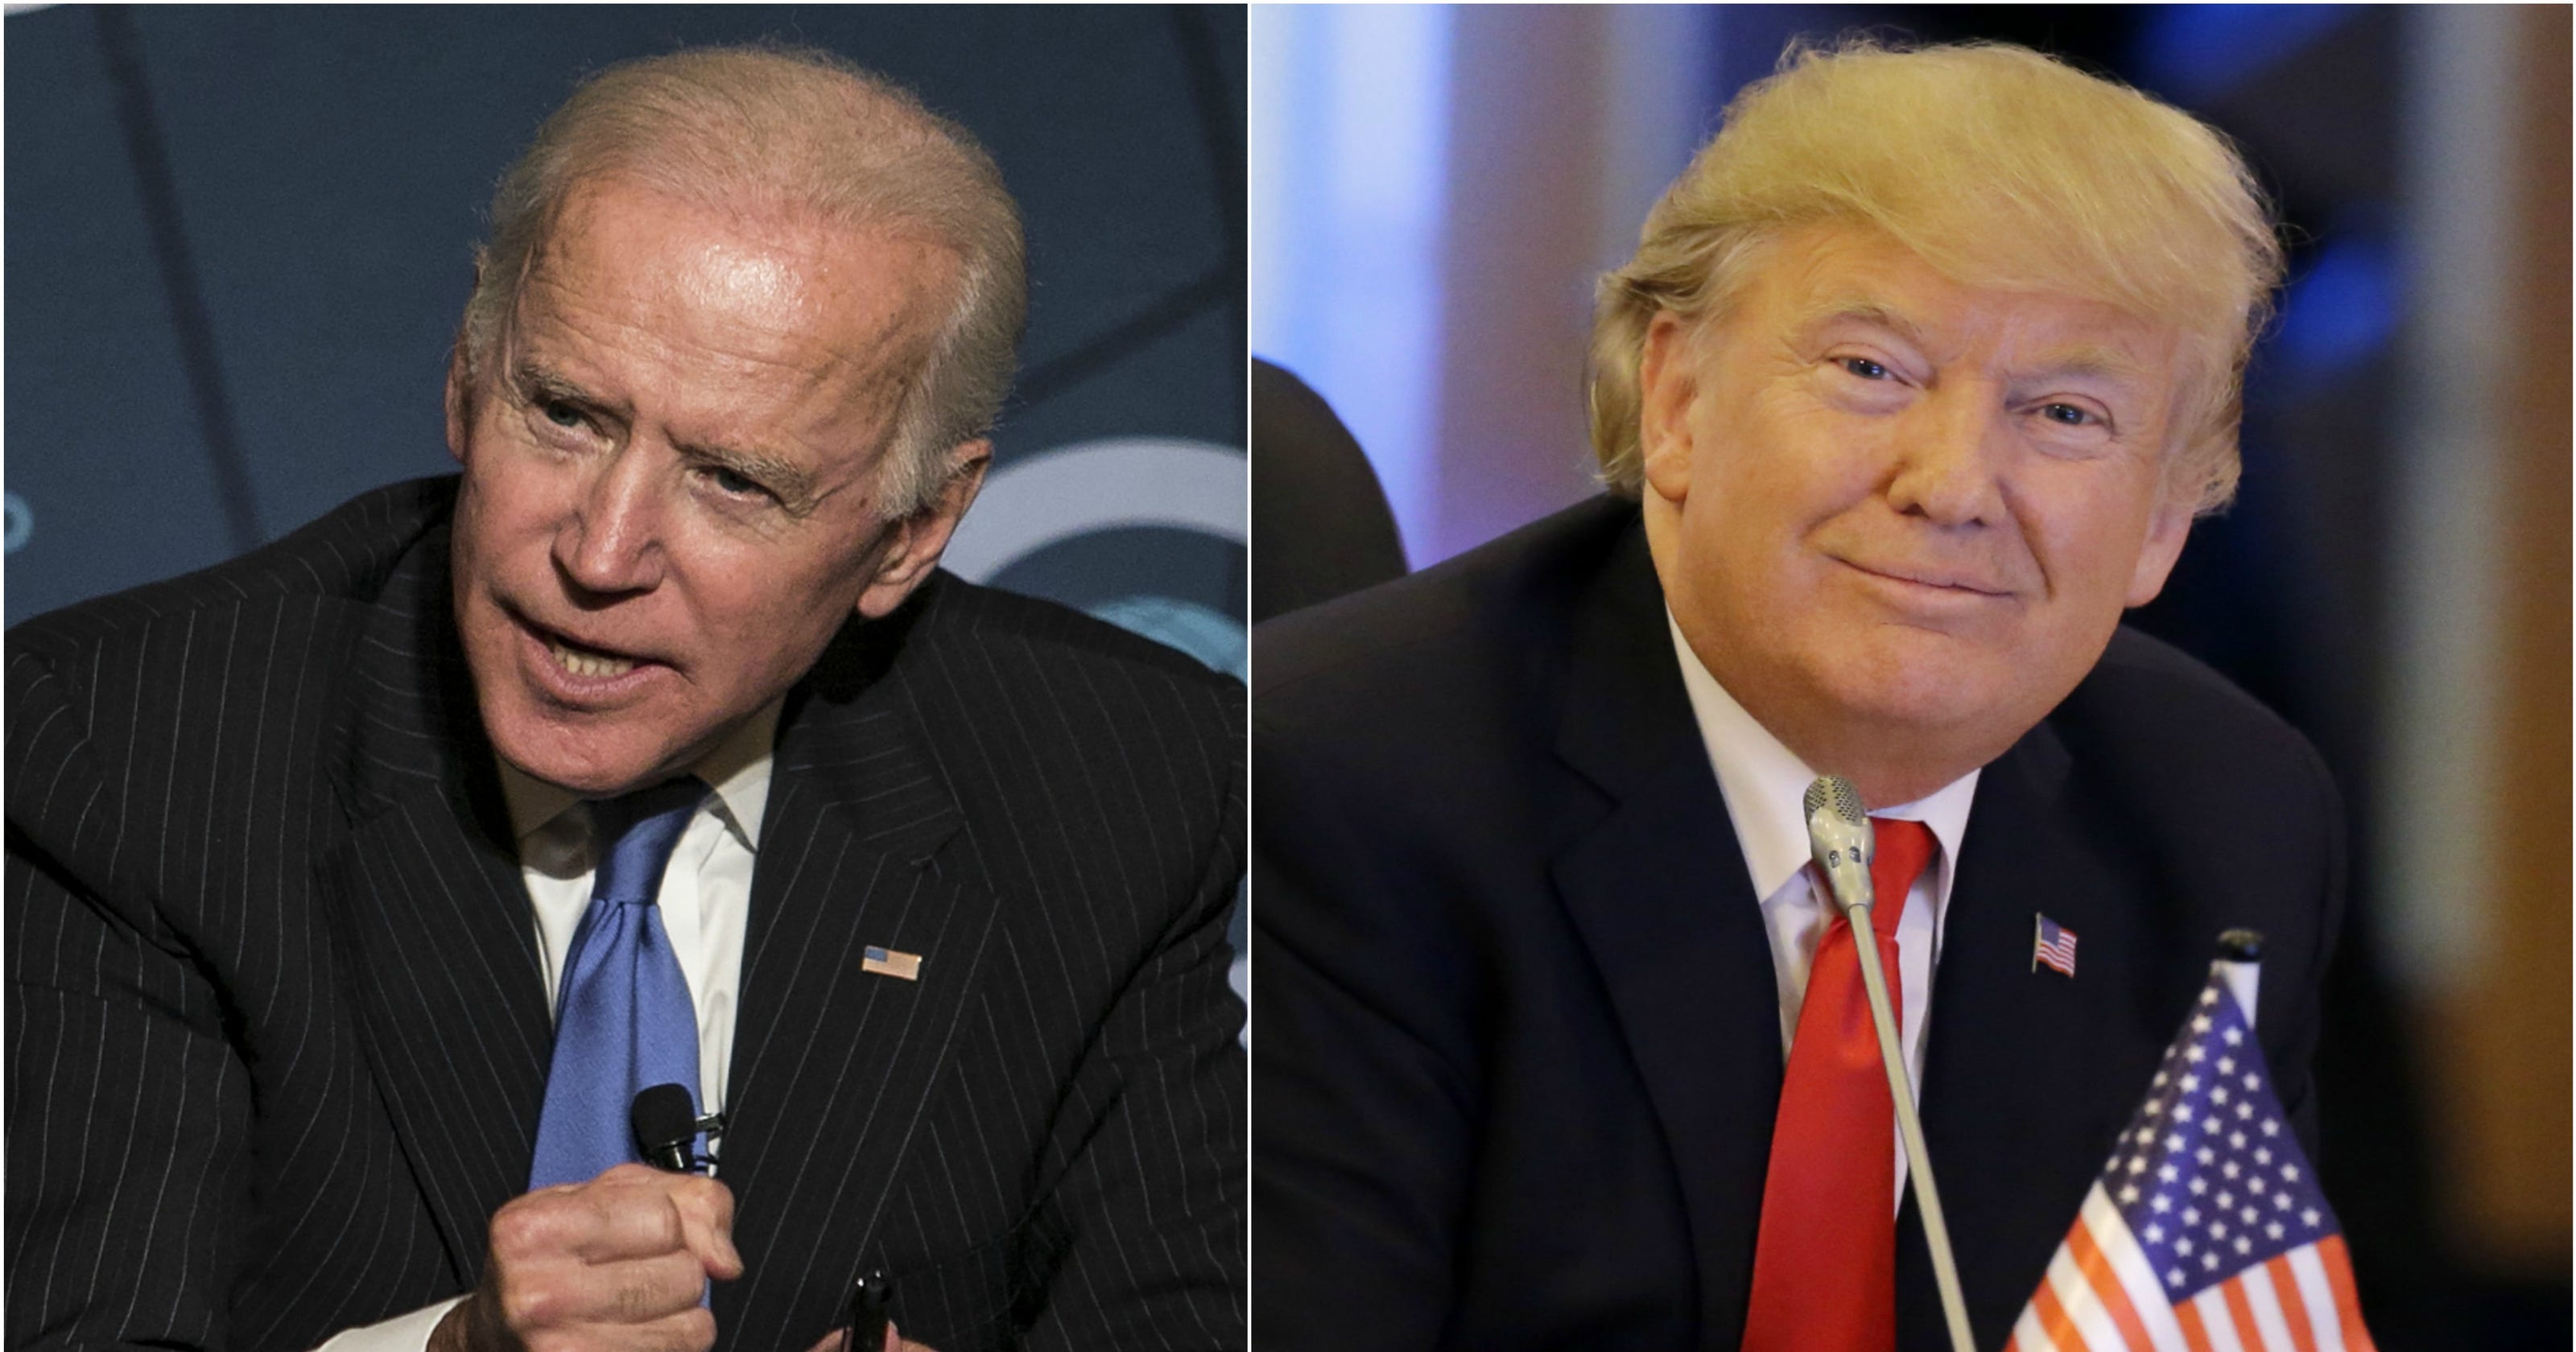 Biden vs. Trump Who's leading poll on 2020 presidential race